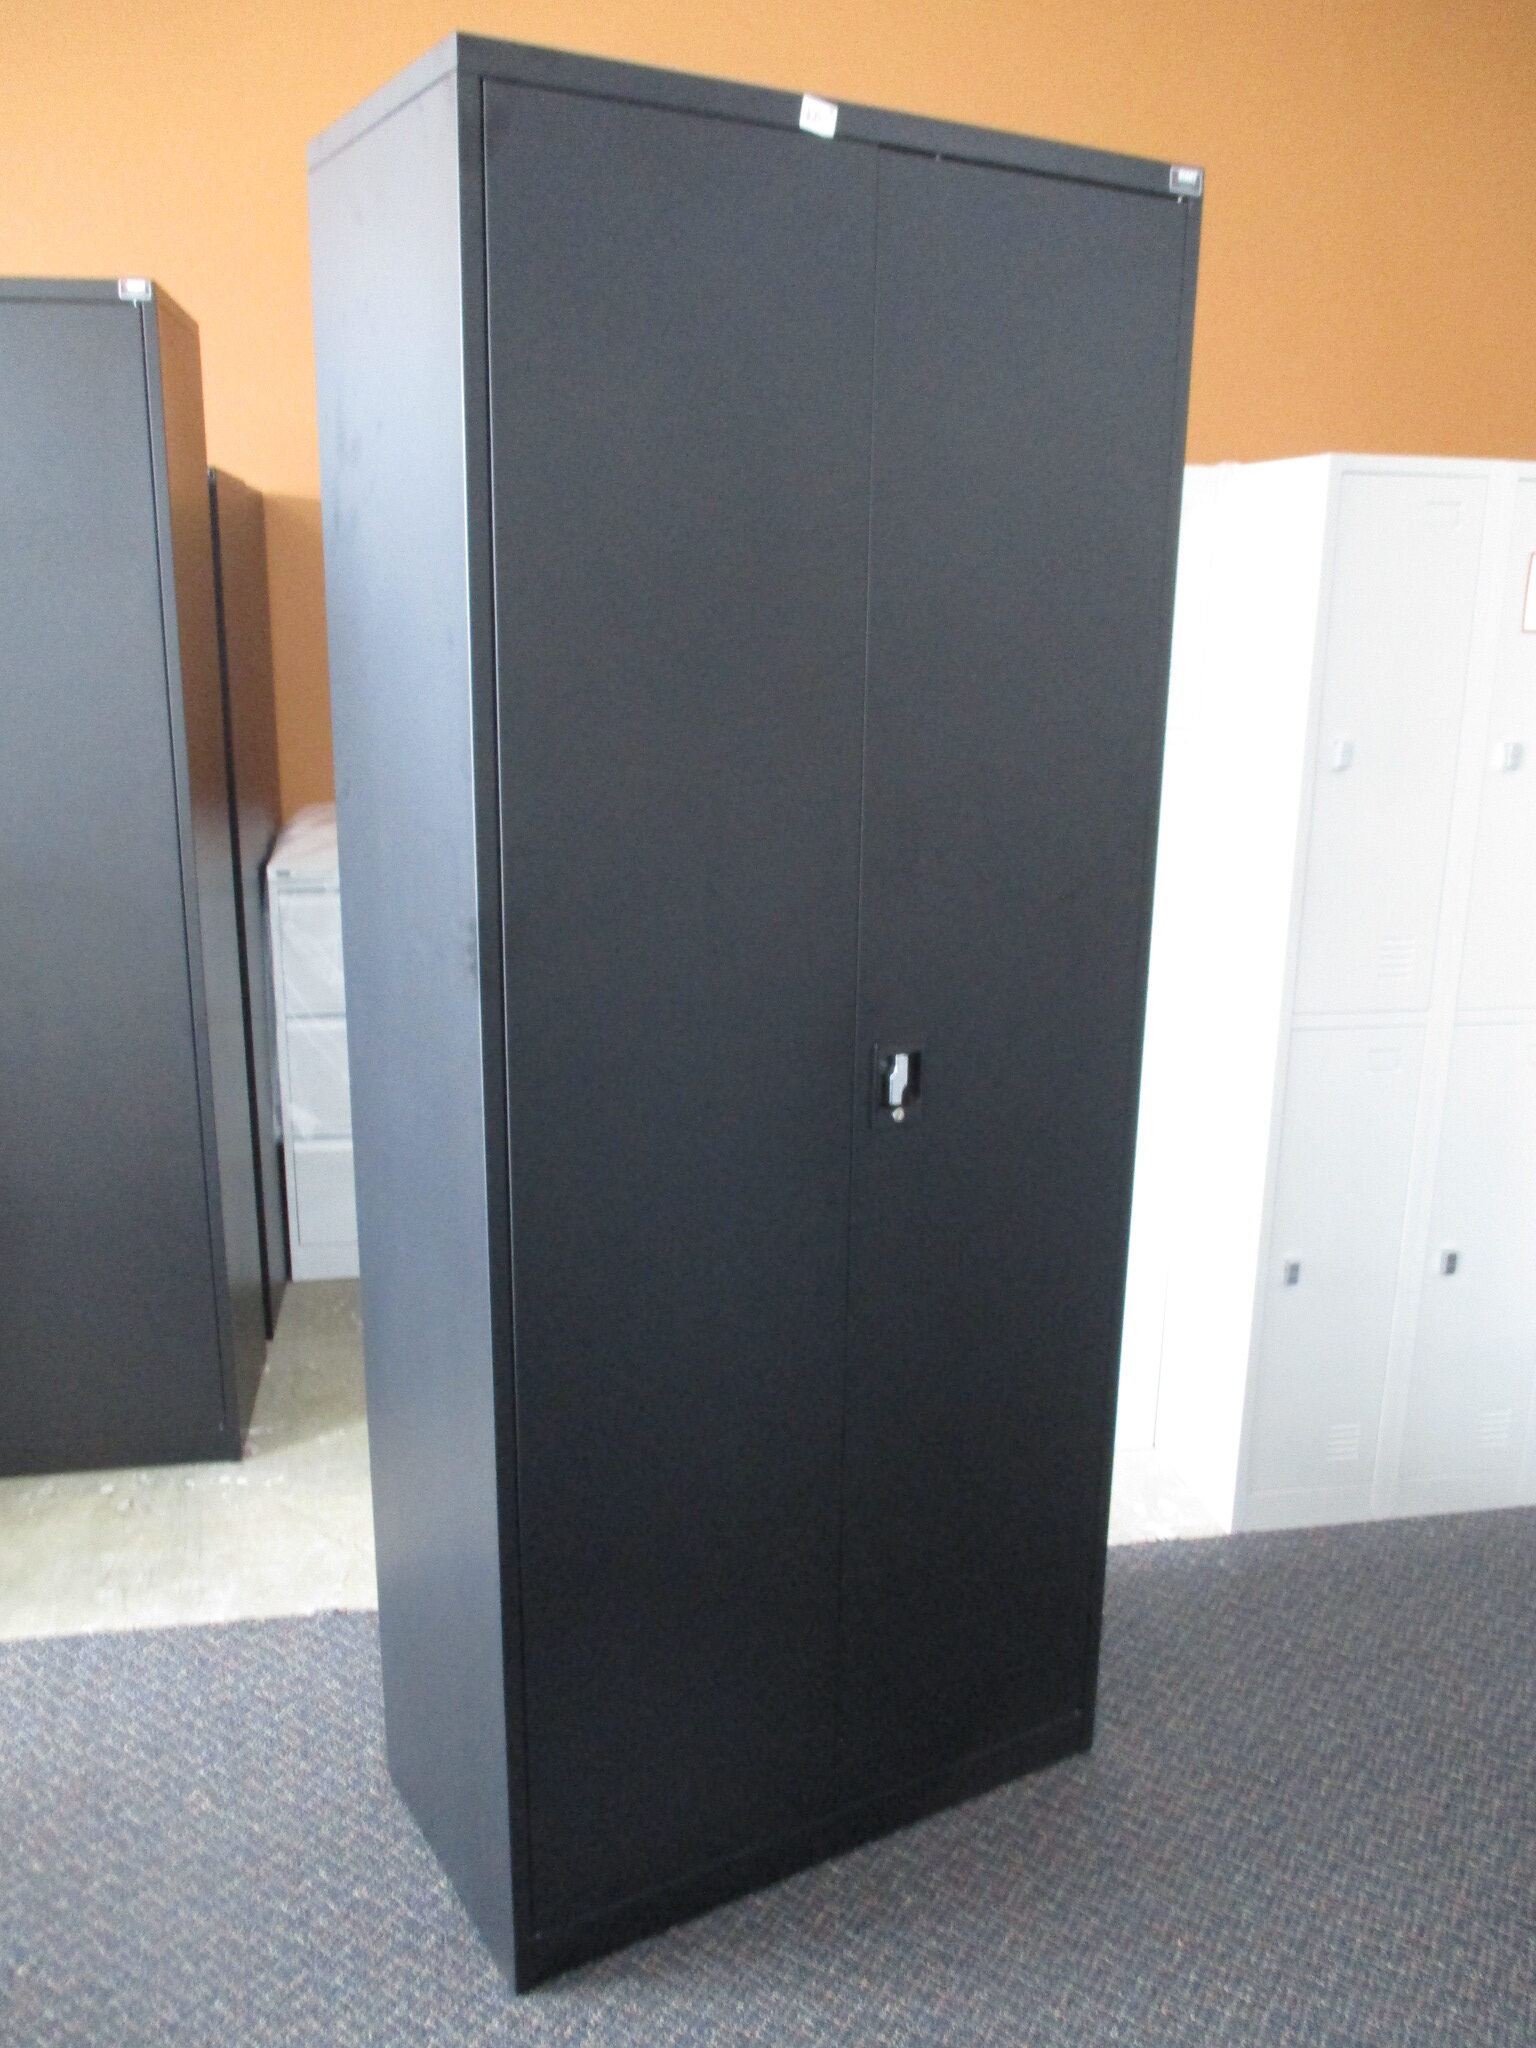 New Black 2M Stationery Cabinets $425